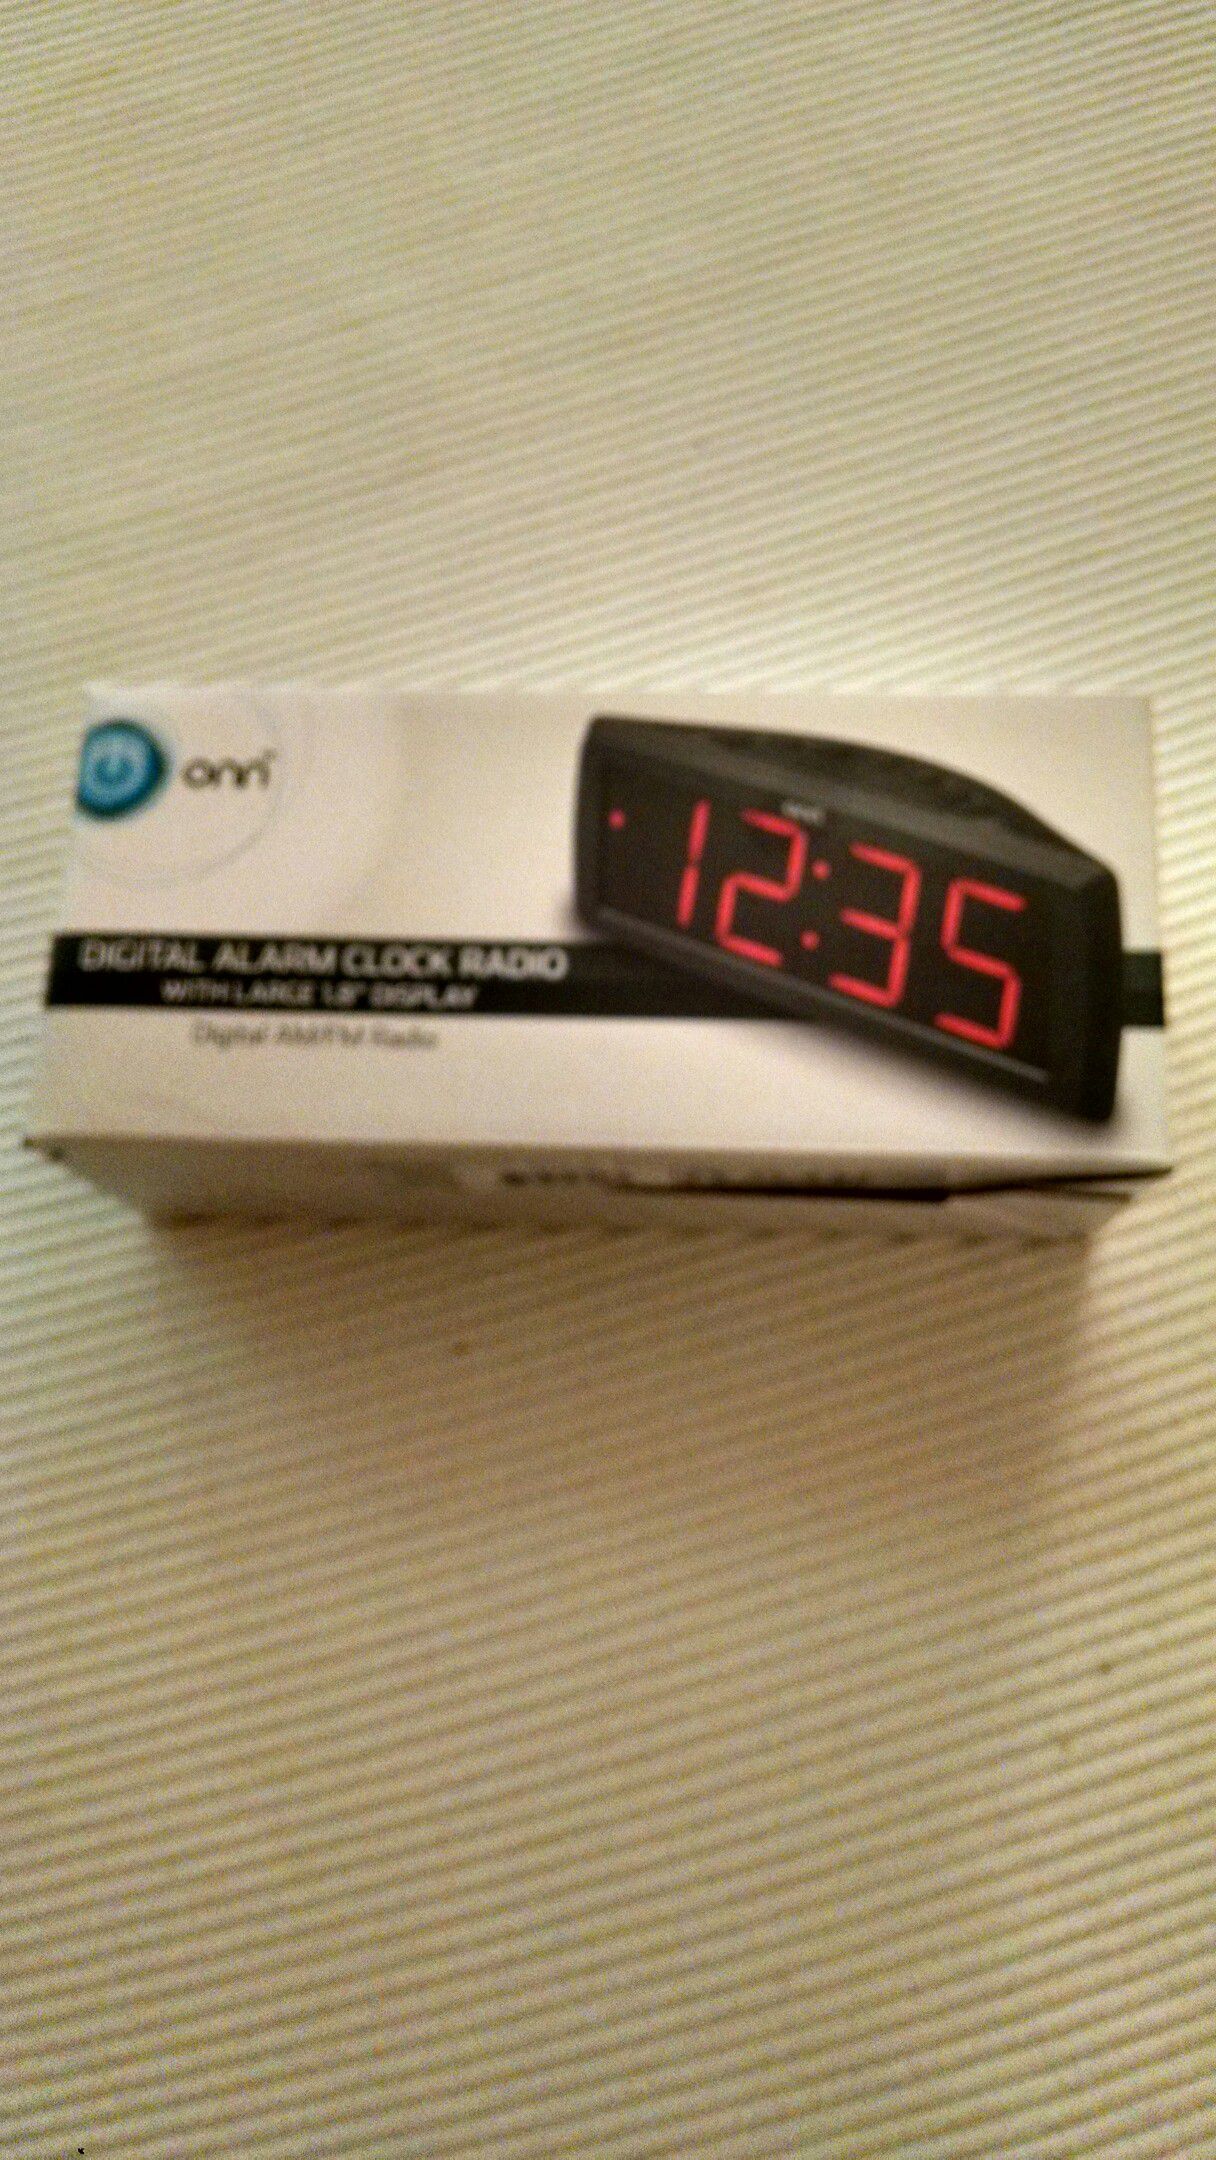 Alarm clock/radio